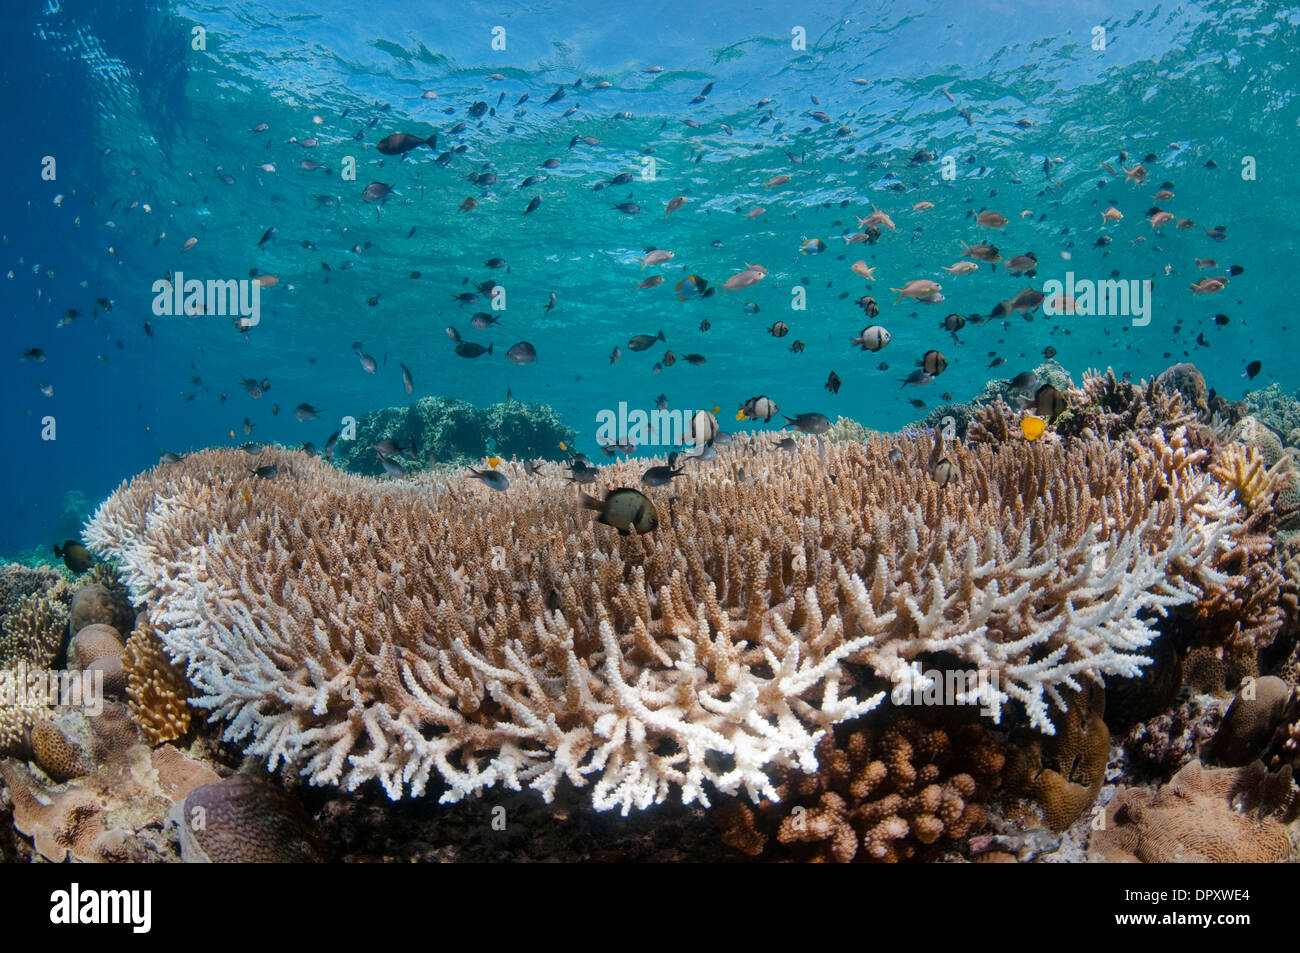 Reef scene with fish, Bunaken, Manado, North Sulewesi, Indonesia. Stock Photo